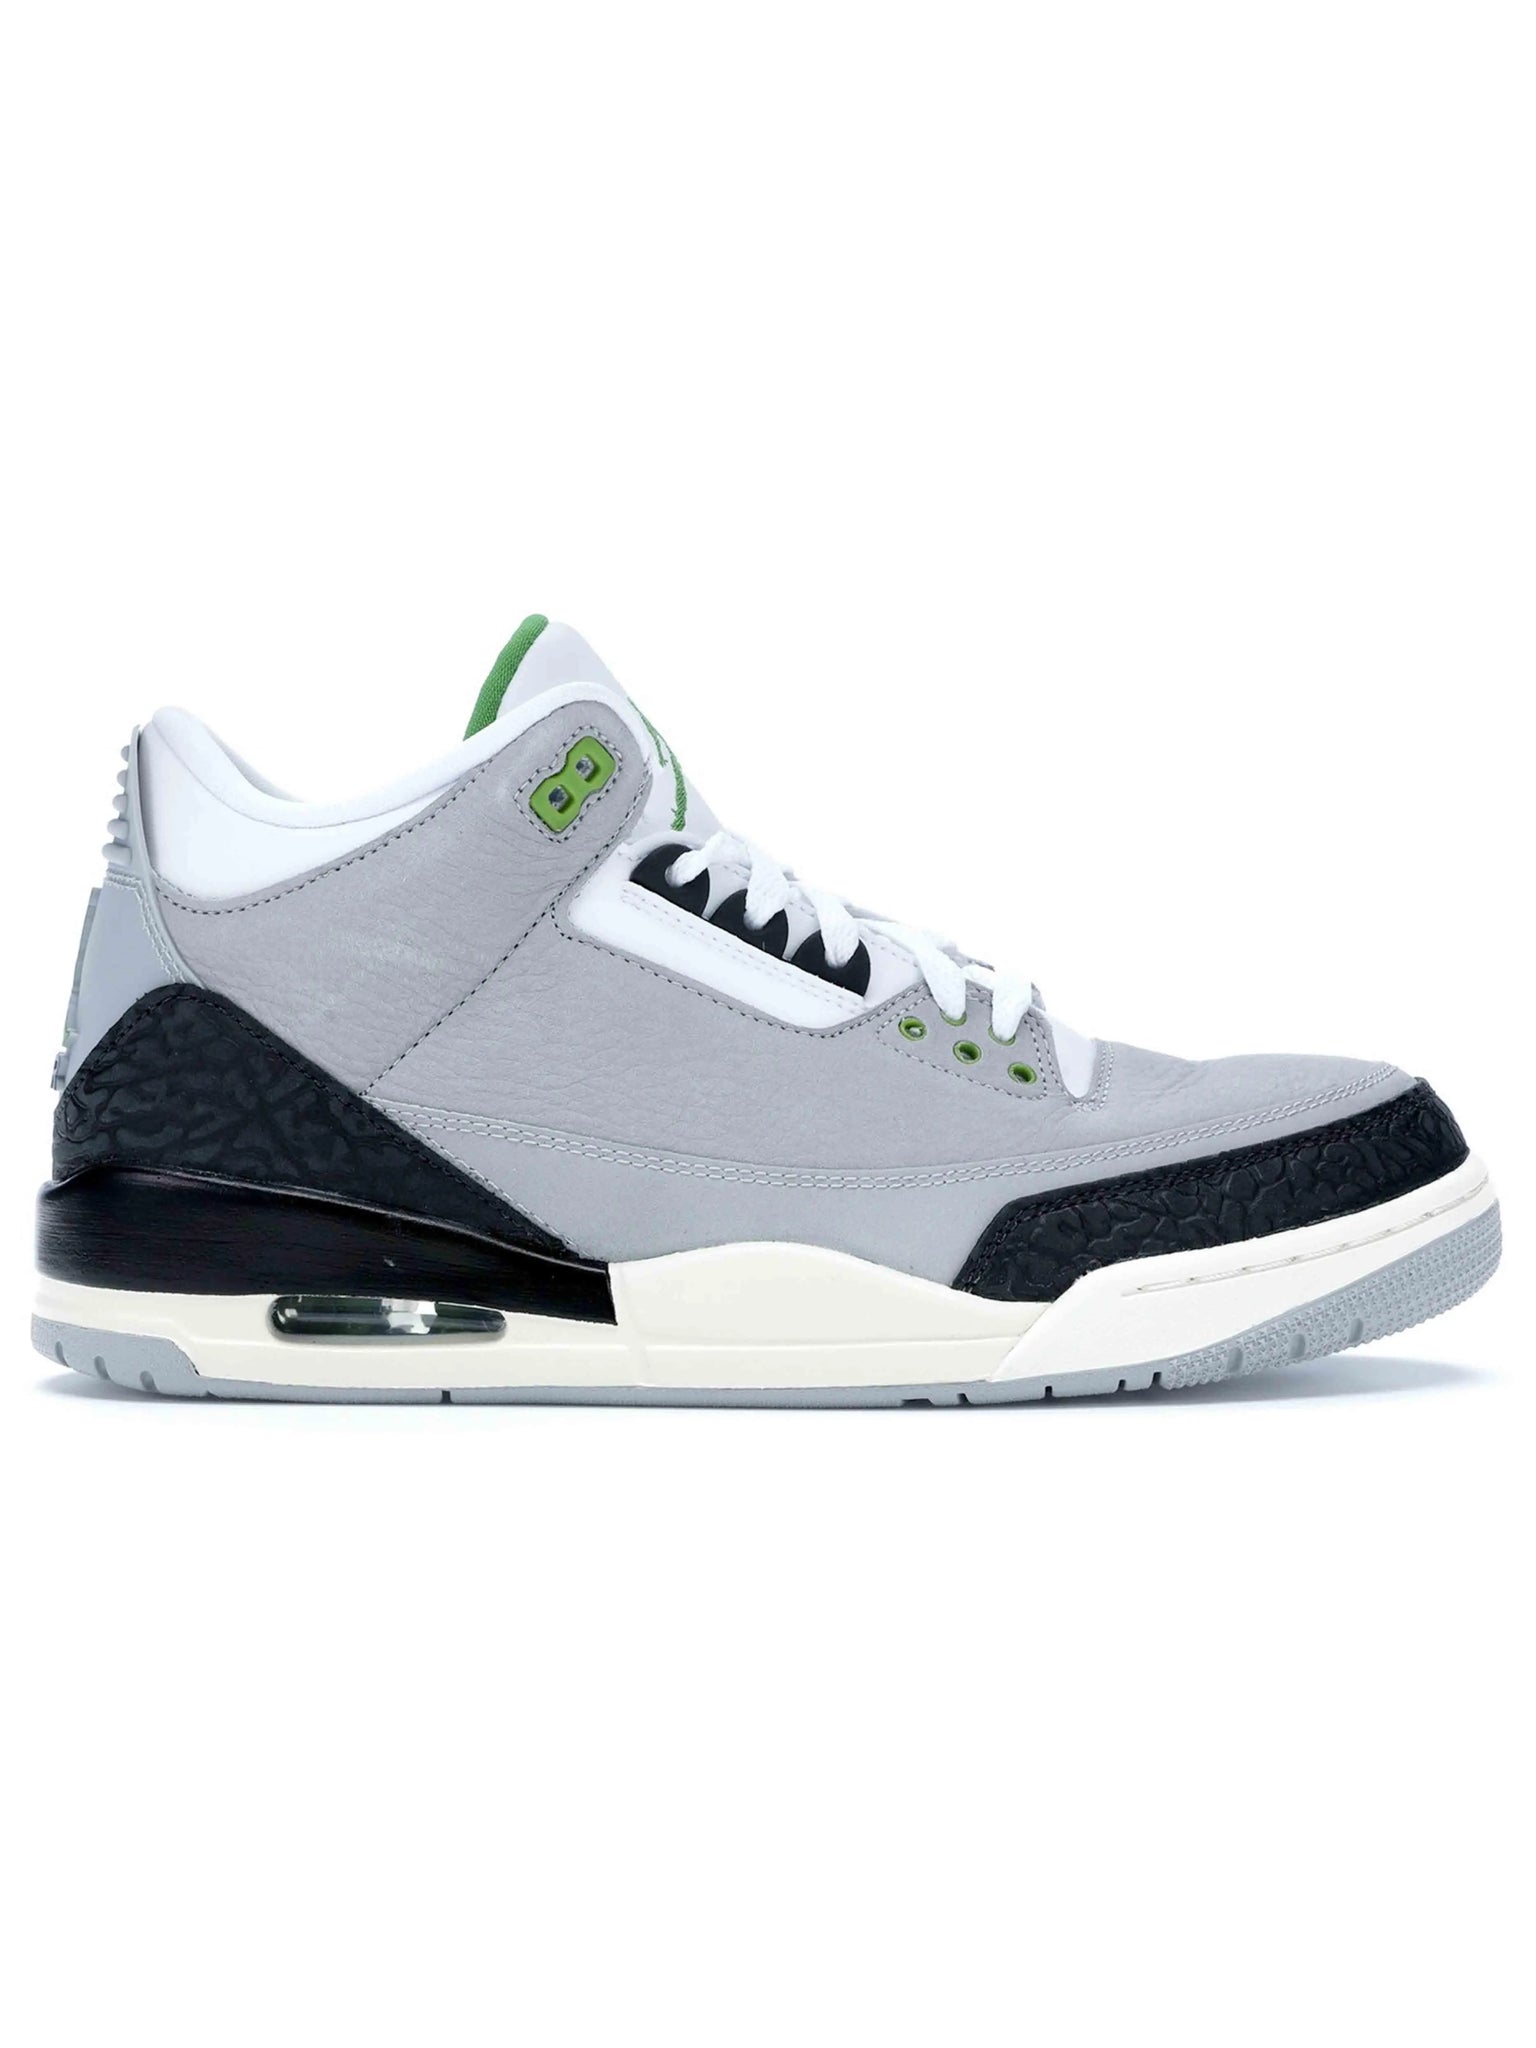 Nike Air Jordan 3 Retro Chlorophyll Jordan Brand